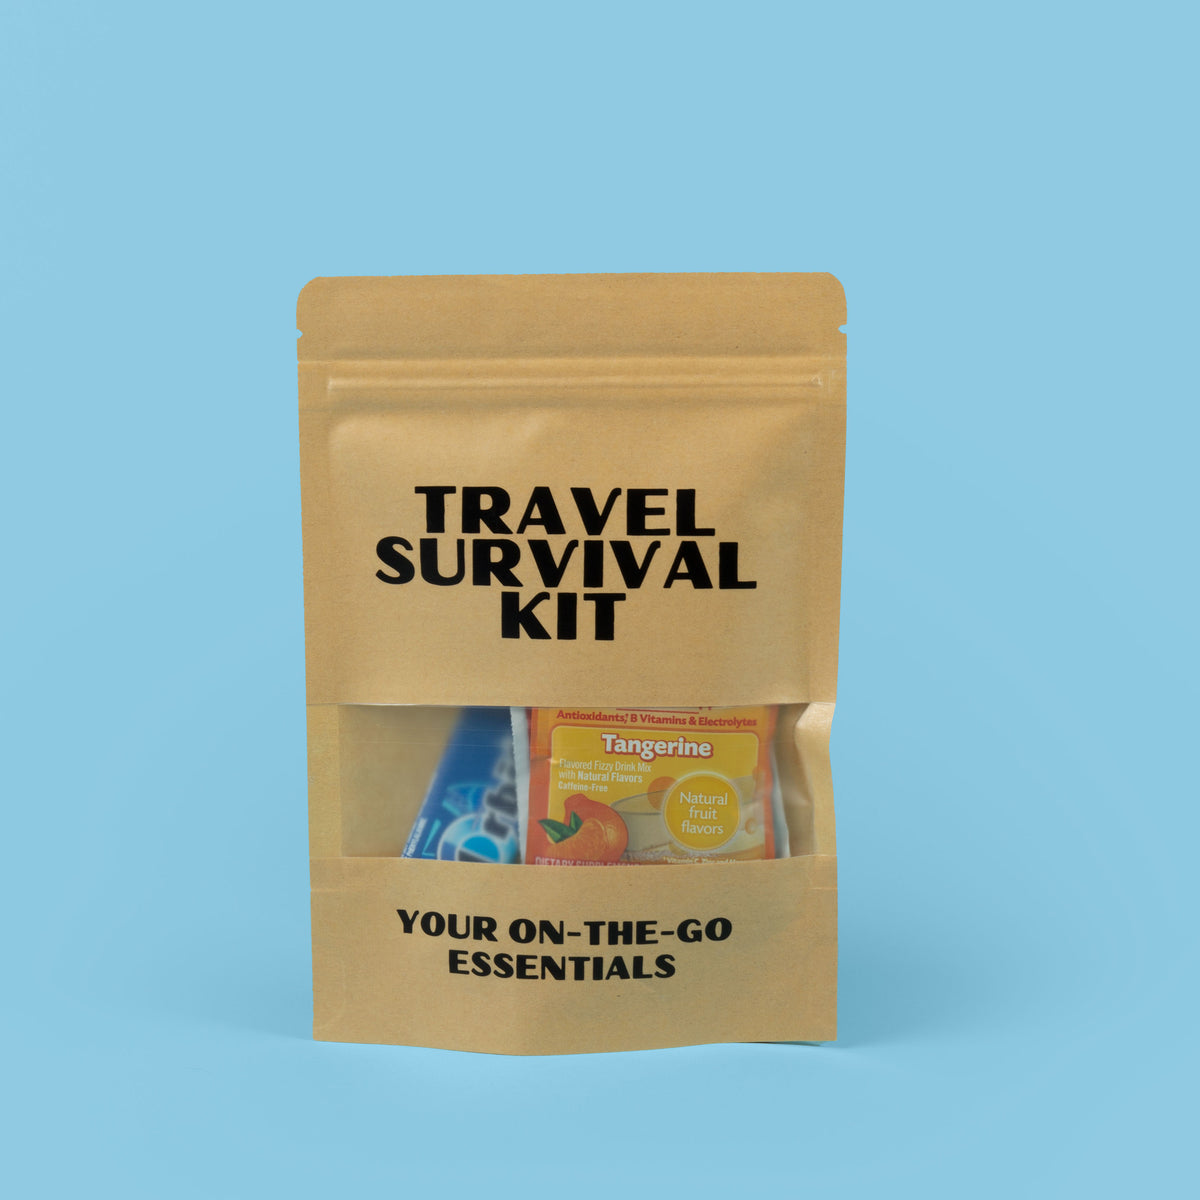 Road Trip Kit Bag Travel Essentials Kit Hangover Kit Recovery Kit With  Supplies Travel Eyemask Earplugs Car Travel Emergency Kit 